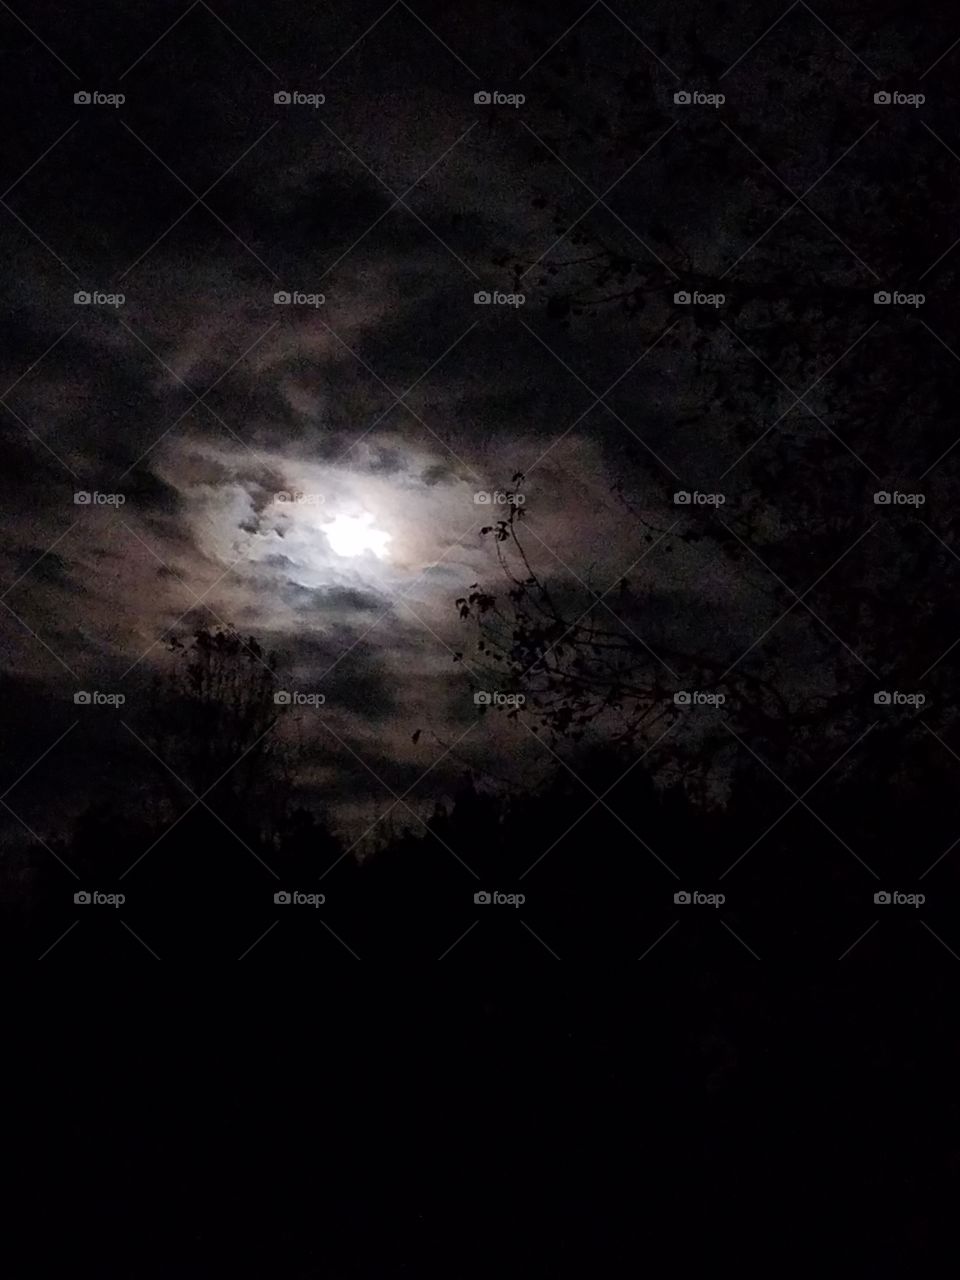 Dark, moon lit night.